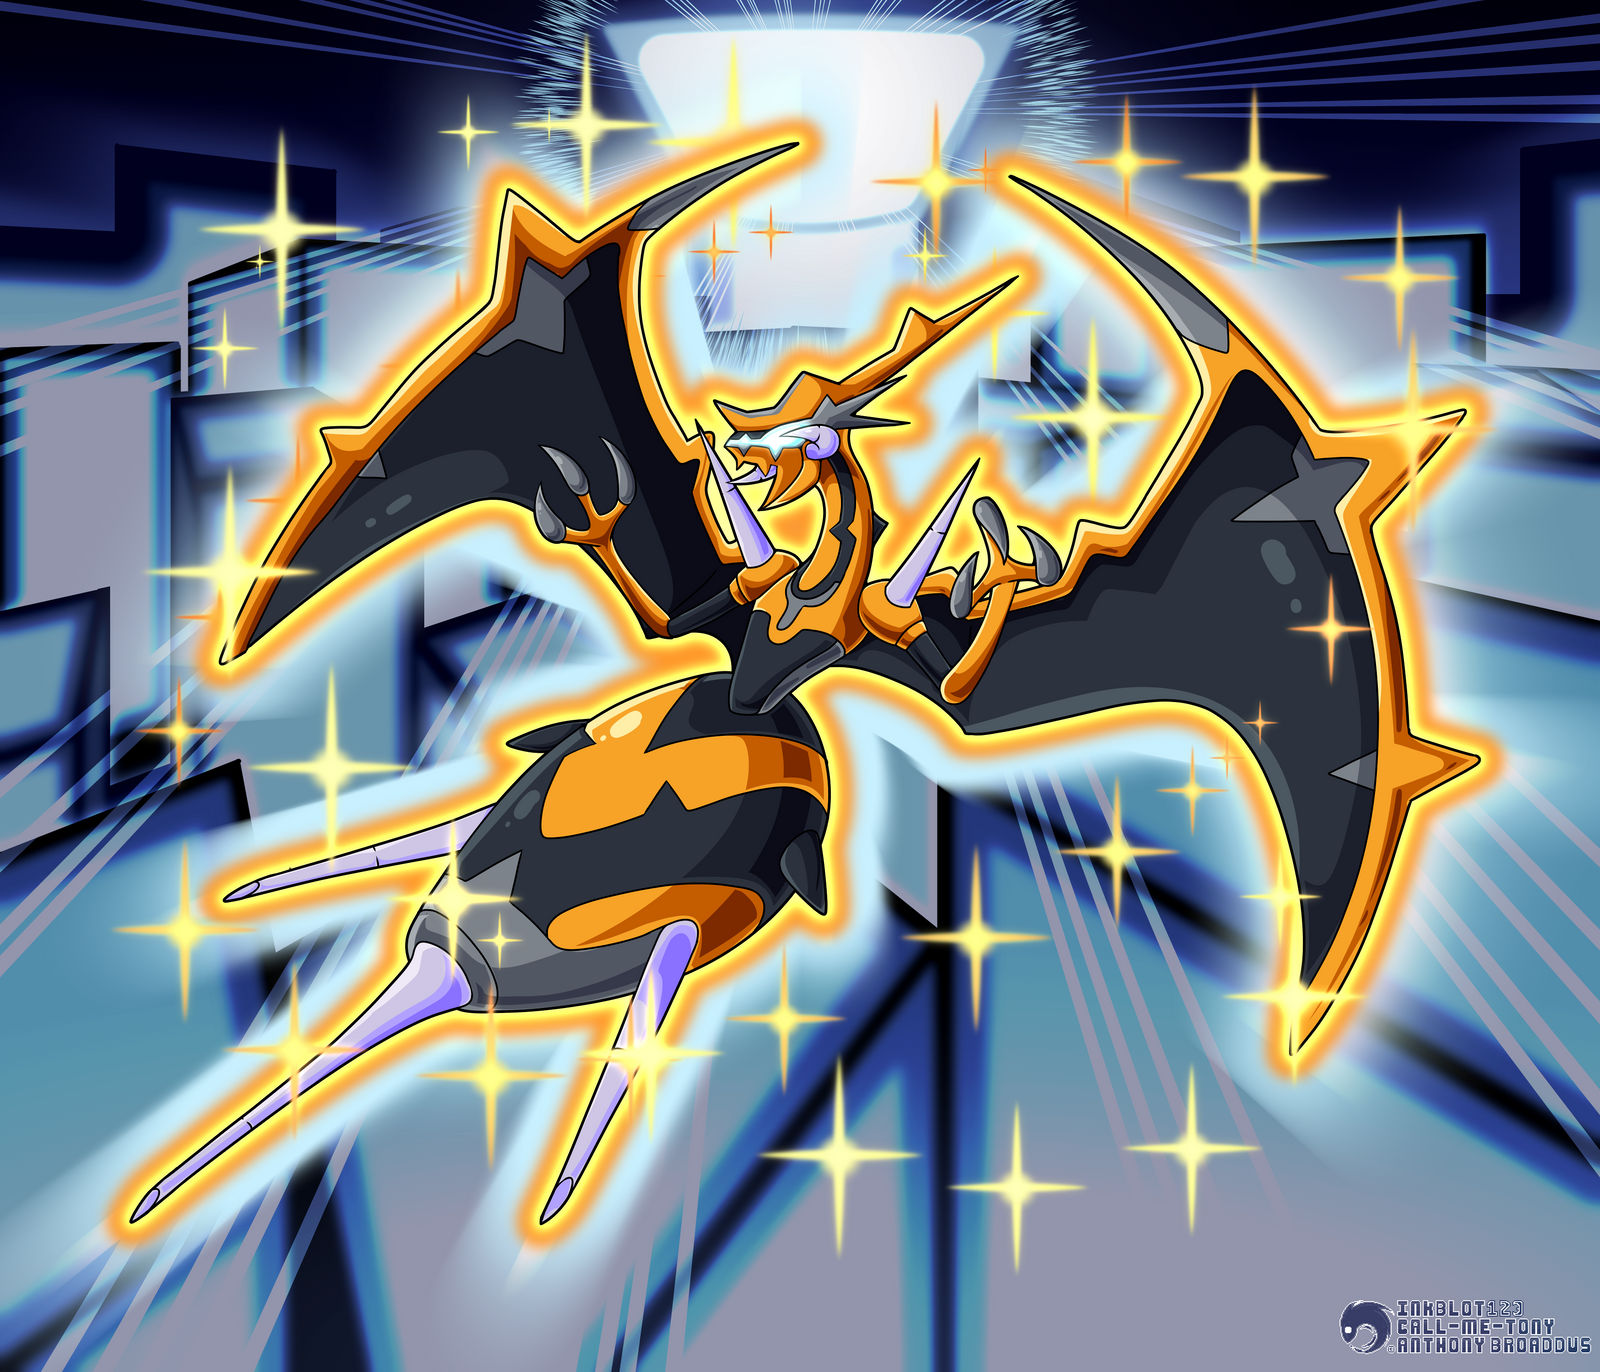 249 - The Diving Pokemon - Lugia (Shiny) by Inkblot123 -- Fur